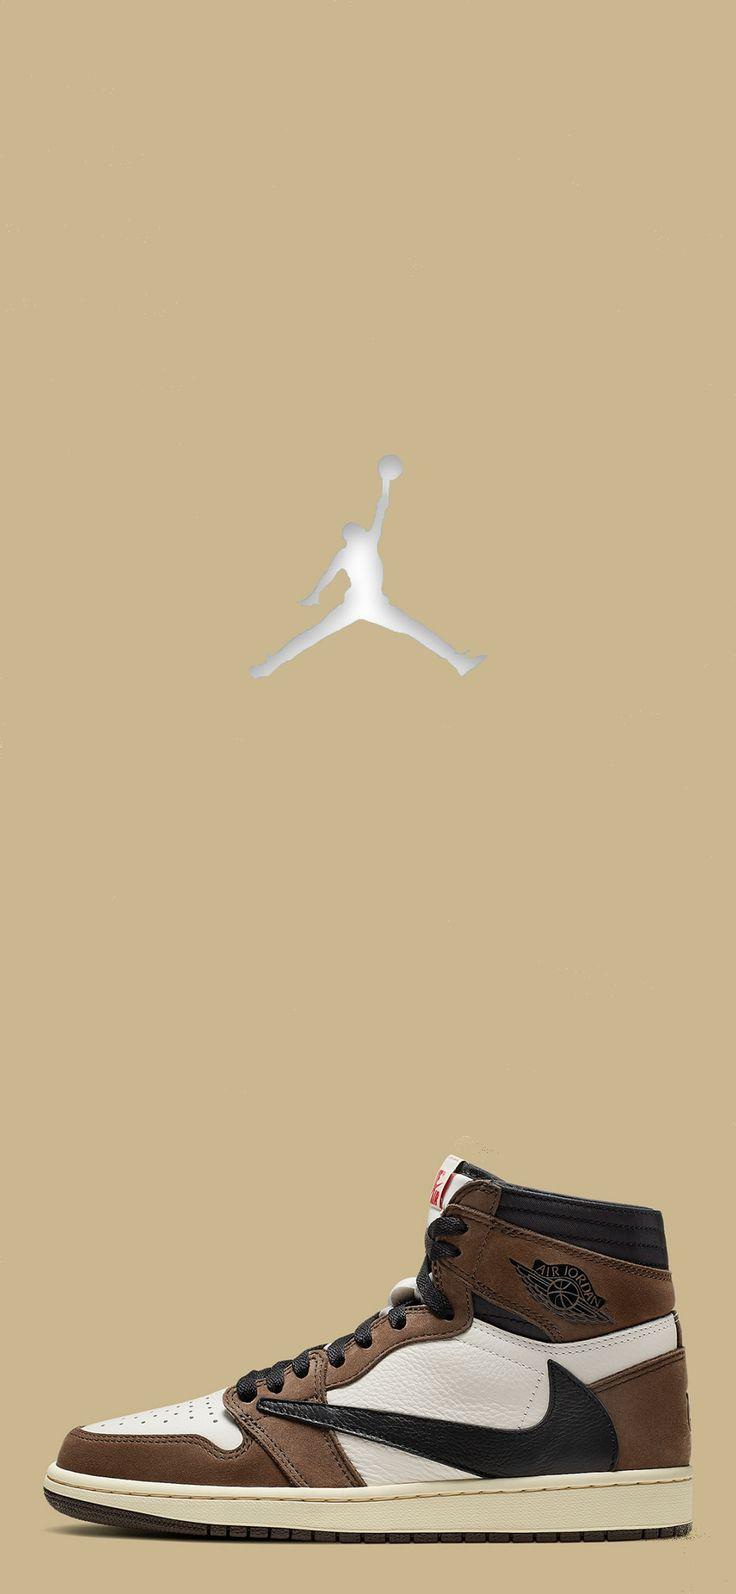 Air Jordan S Travis Scott Shoes Wallpaper Hype